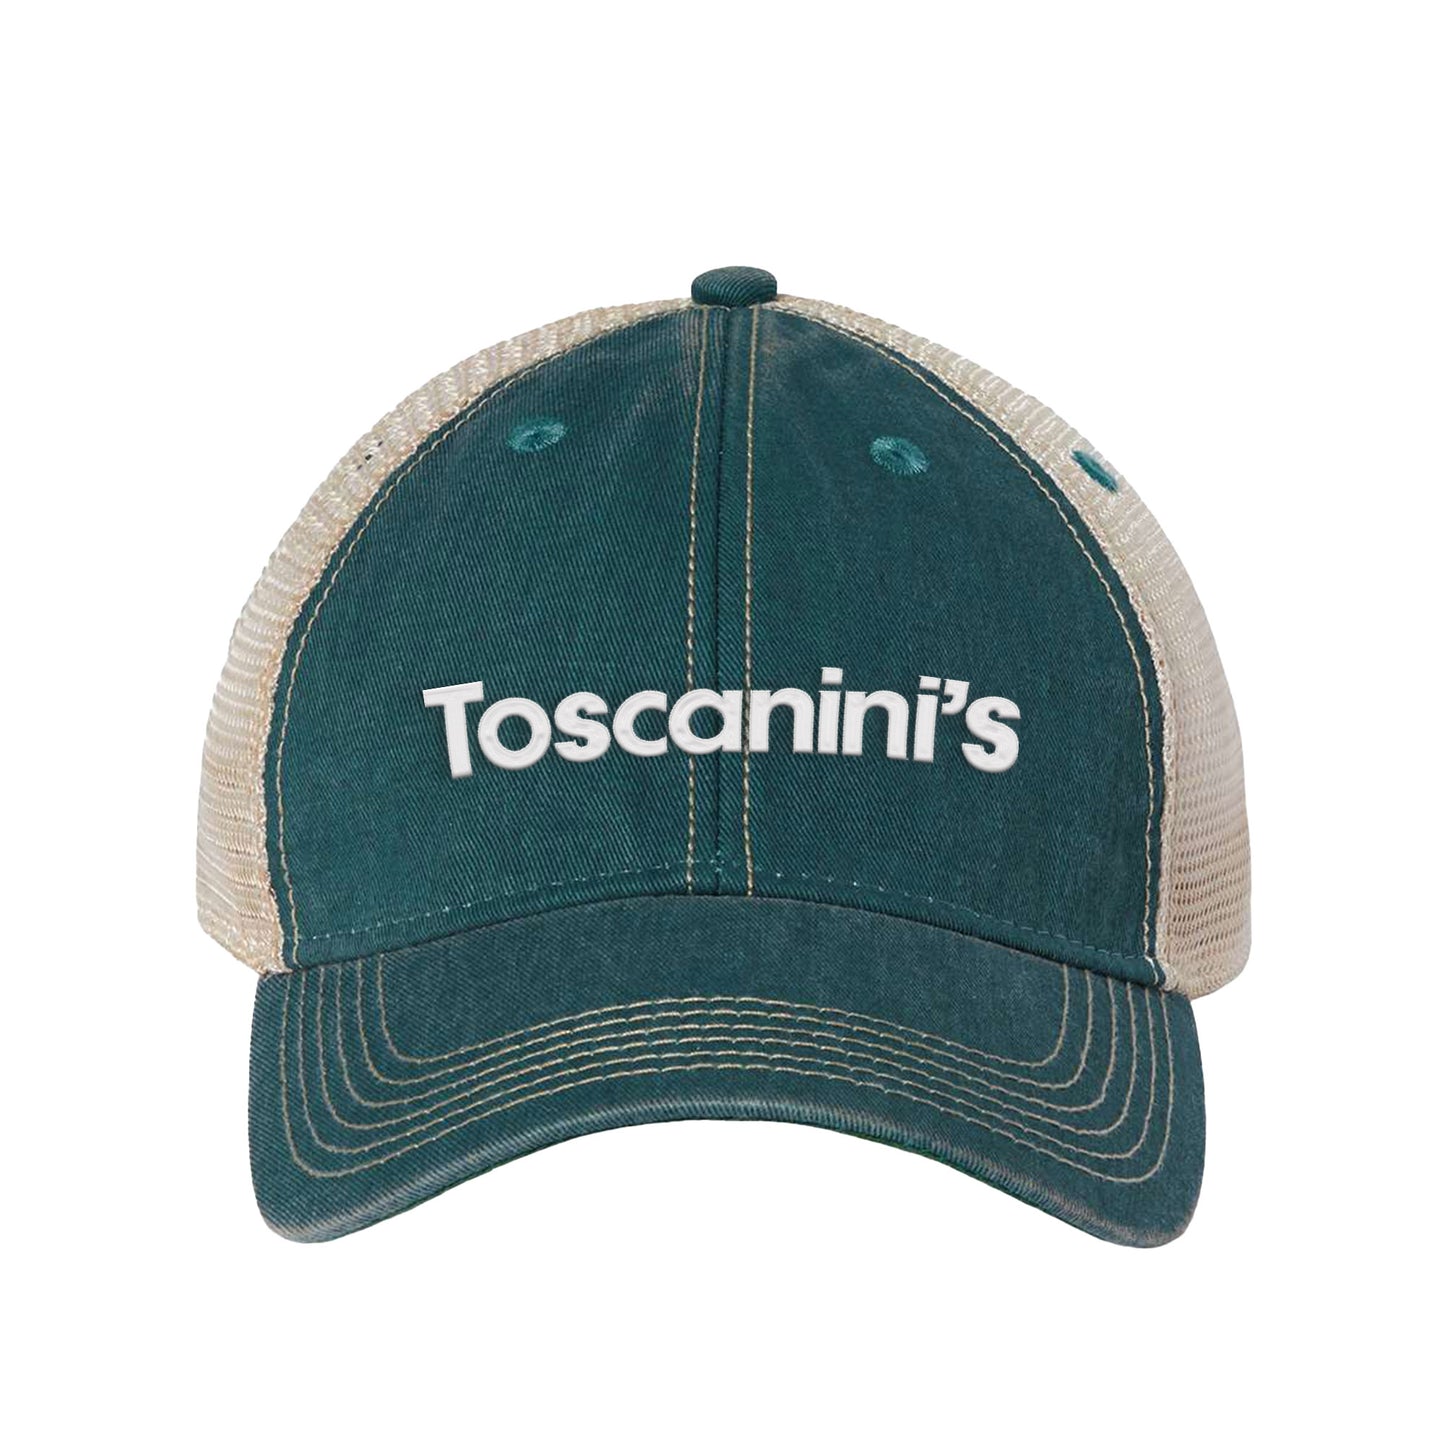 Toscanini's Garment Washed Trucker Hat